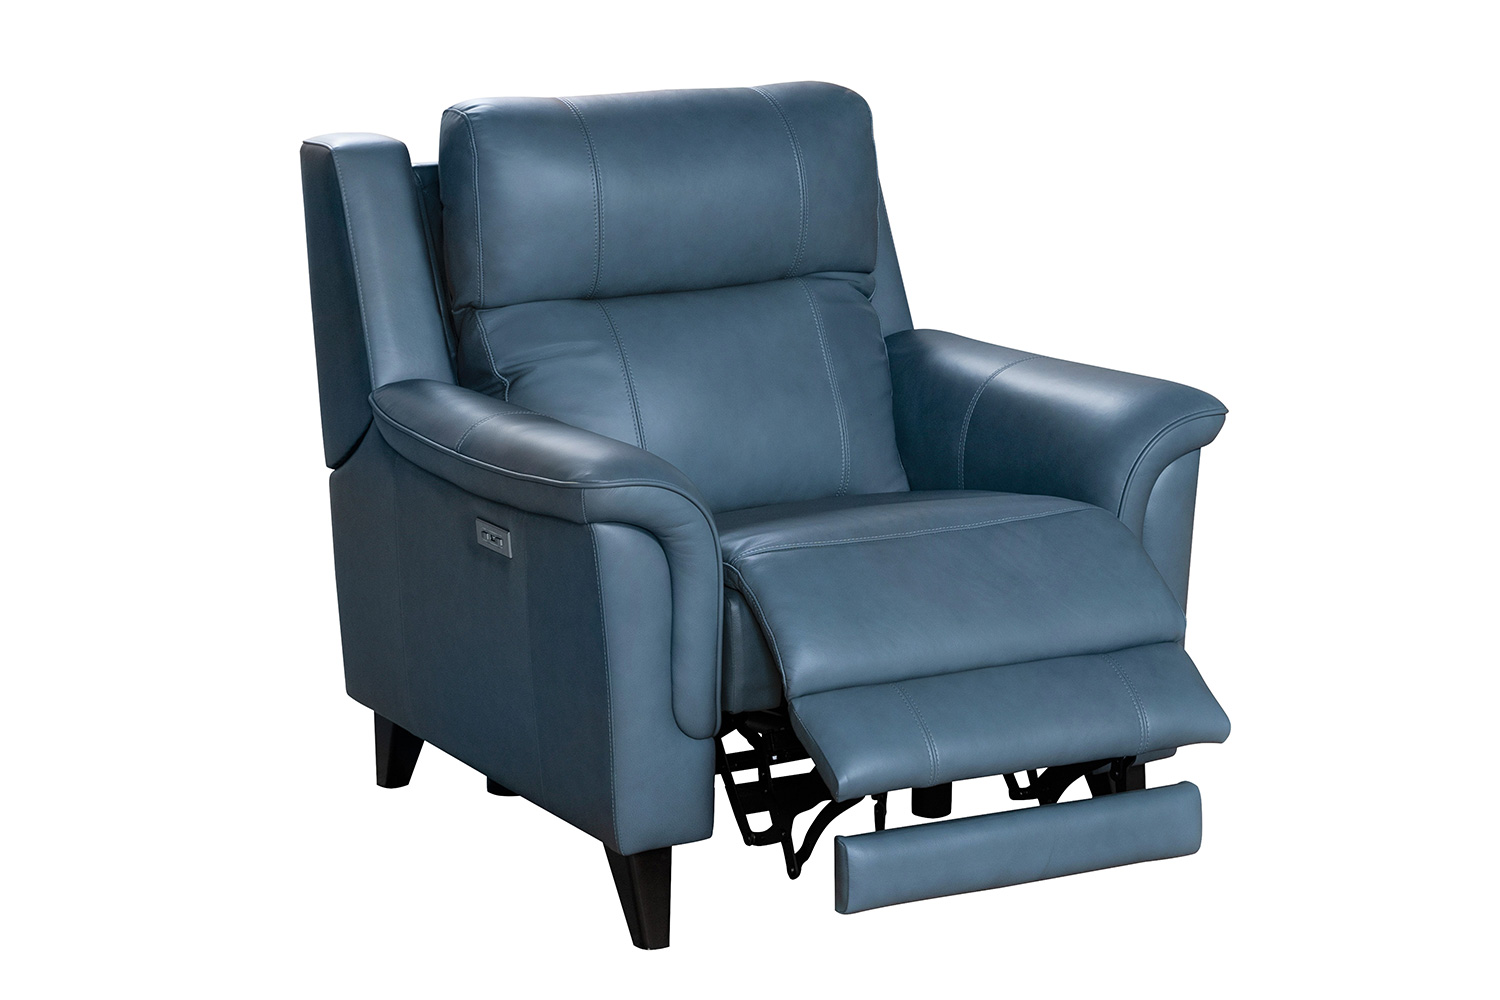 Barcalounger Kester Power Recliner Chair with Power Head Rest - Masen Bluegray/Leather match